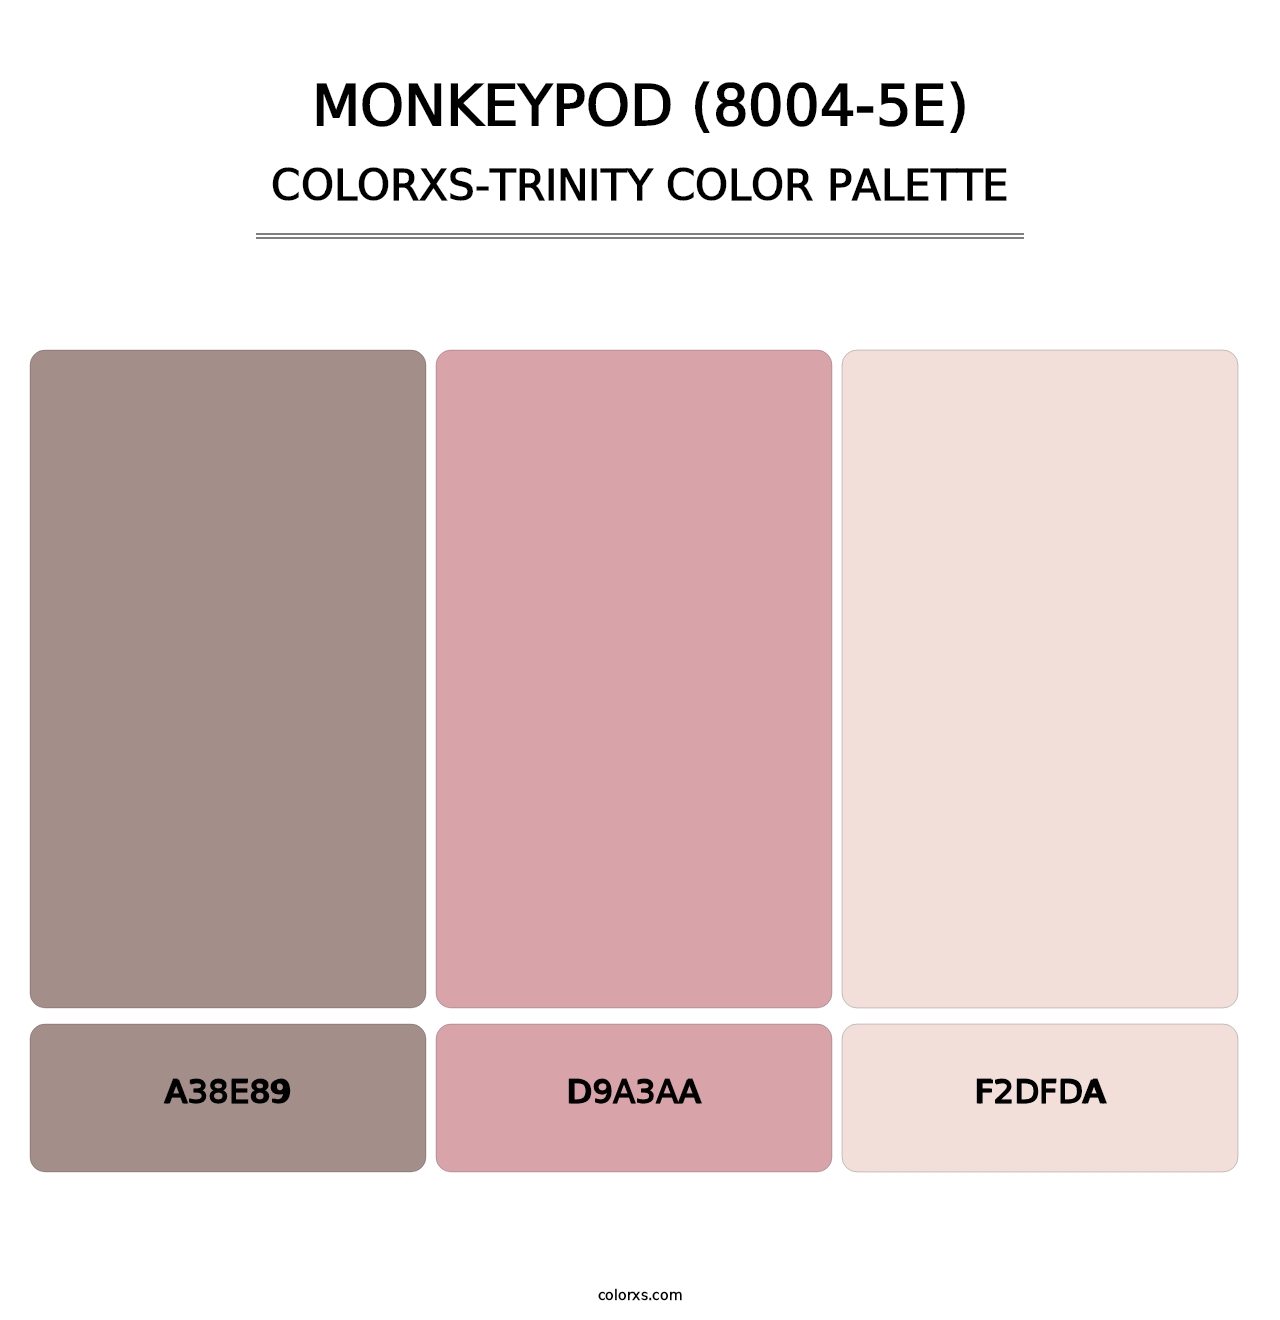 Monkeypod (8004-5E) - Colorxs Trinity Palette